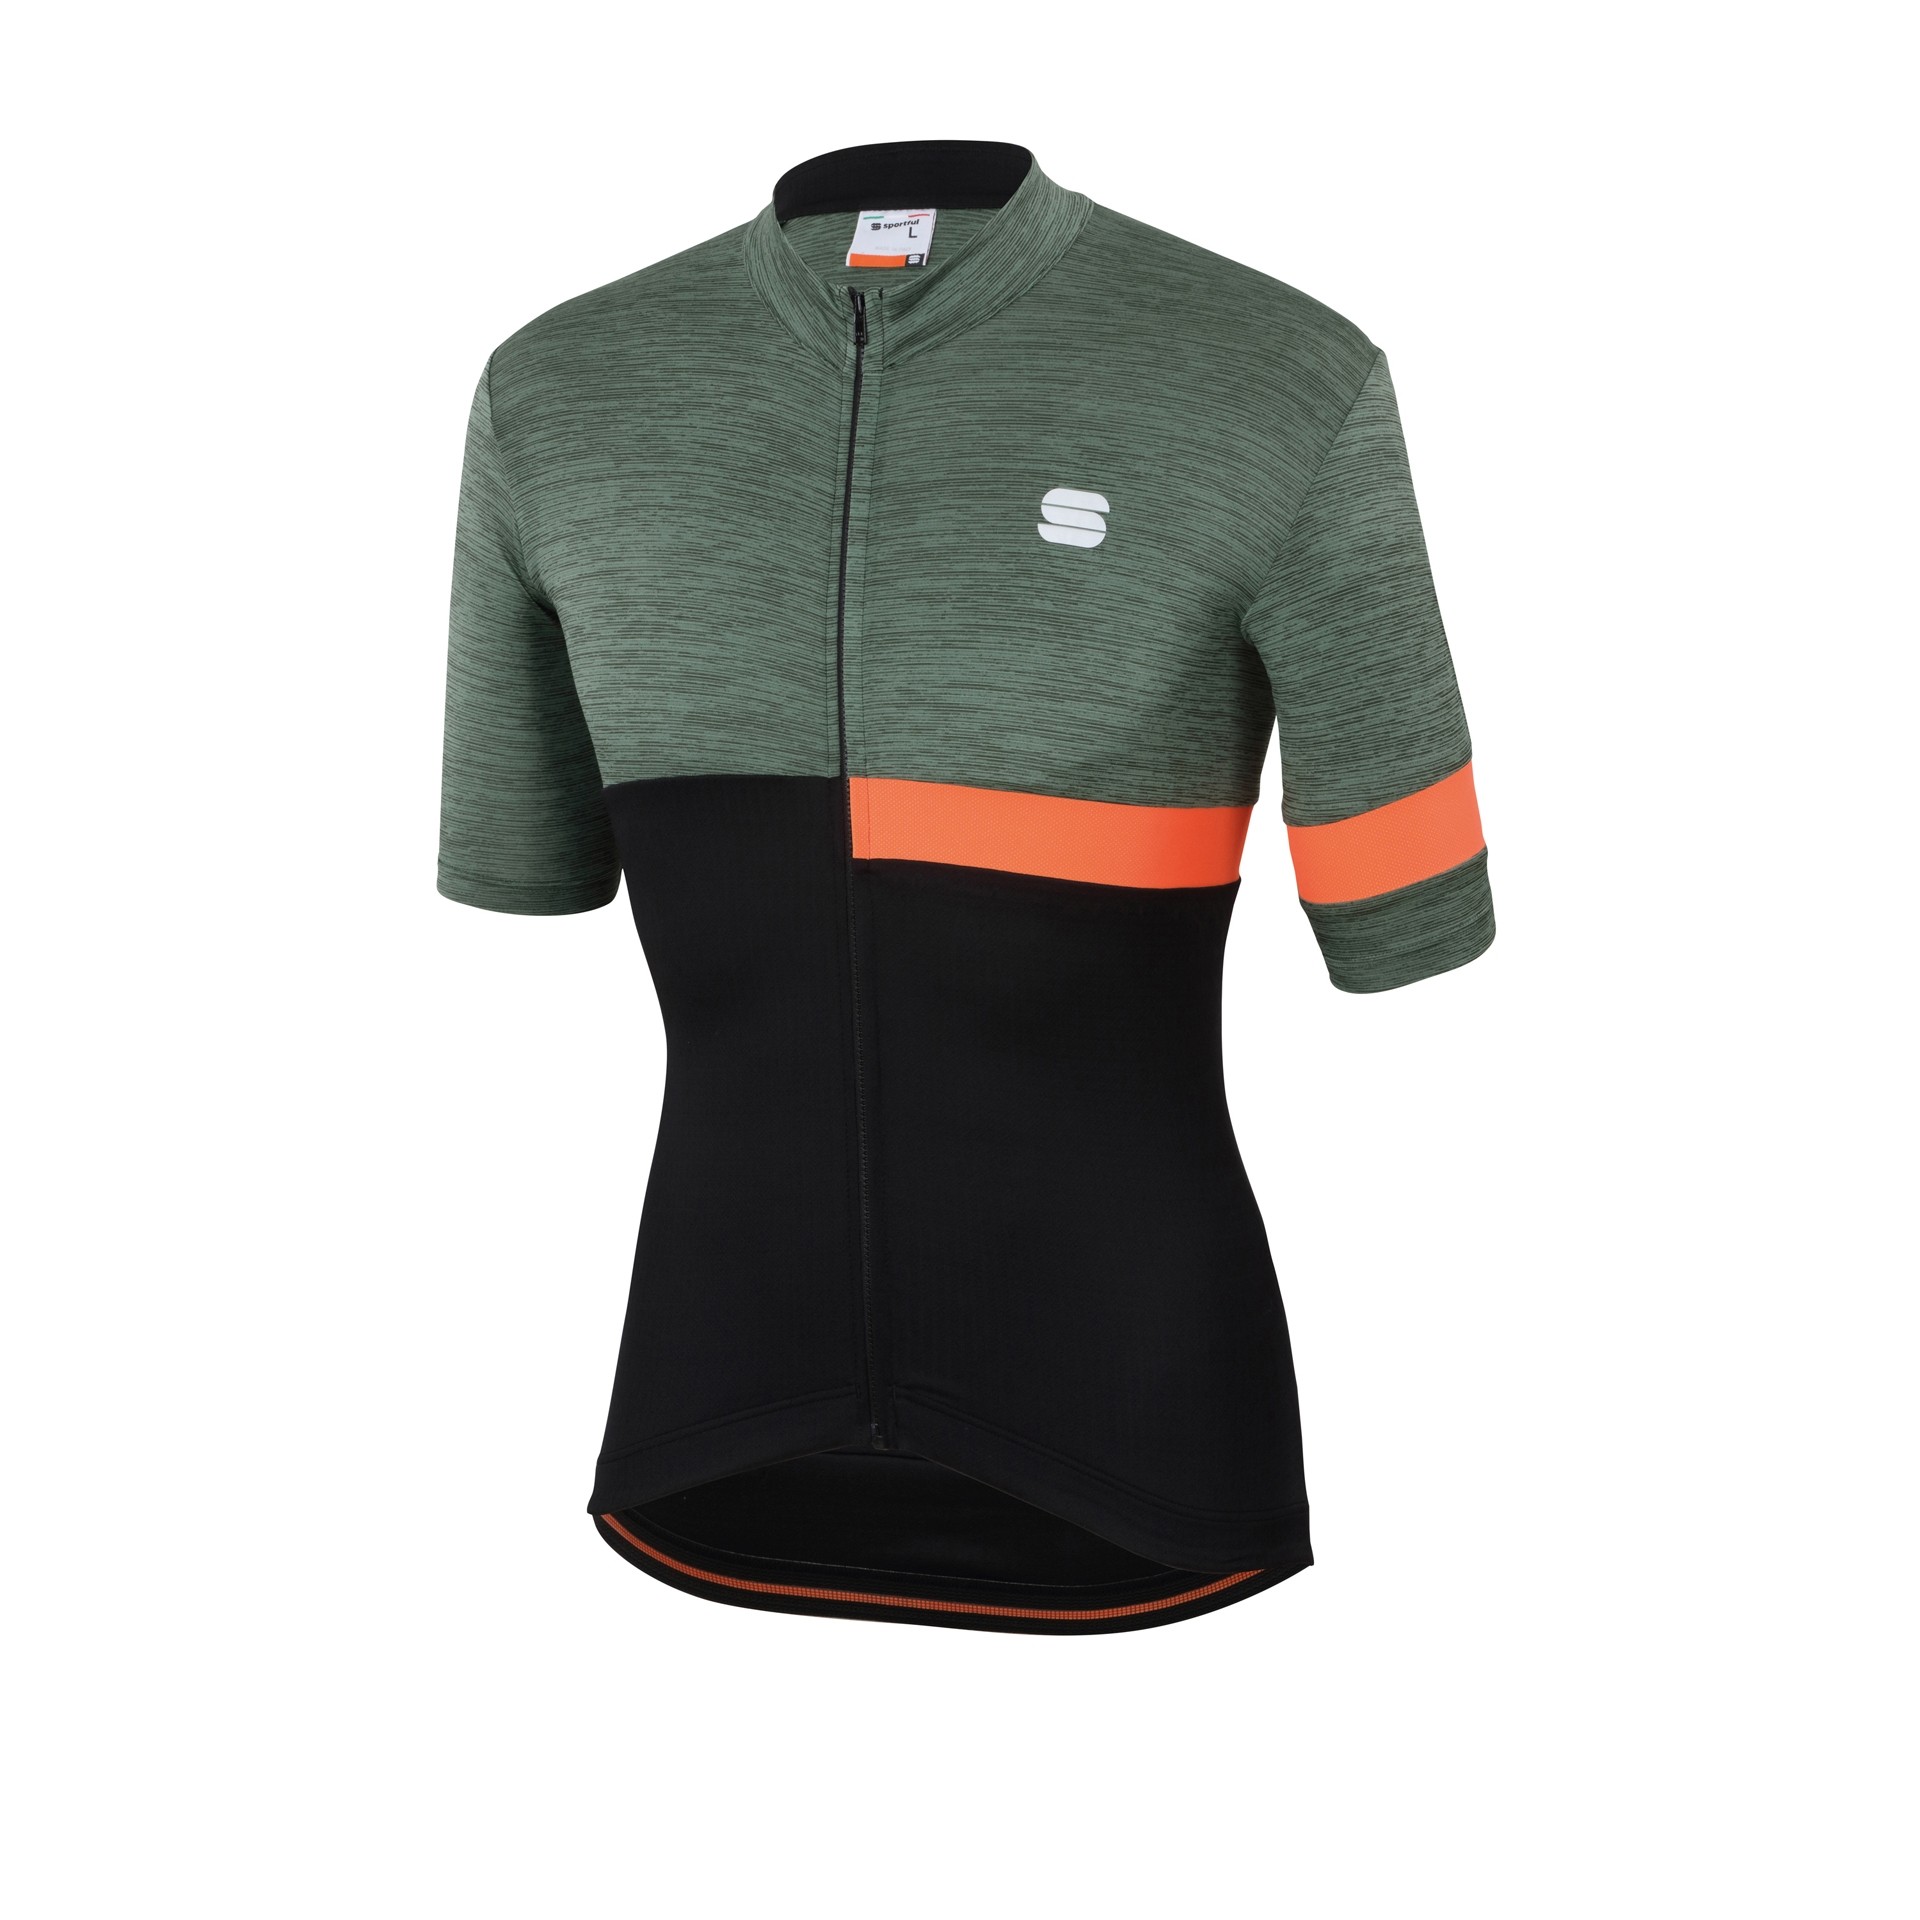 Sportful giara maillot de cyclisme manches courtes dry vert noir orange sdr